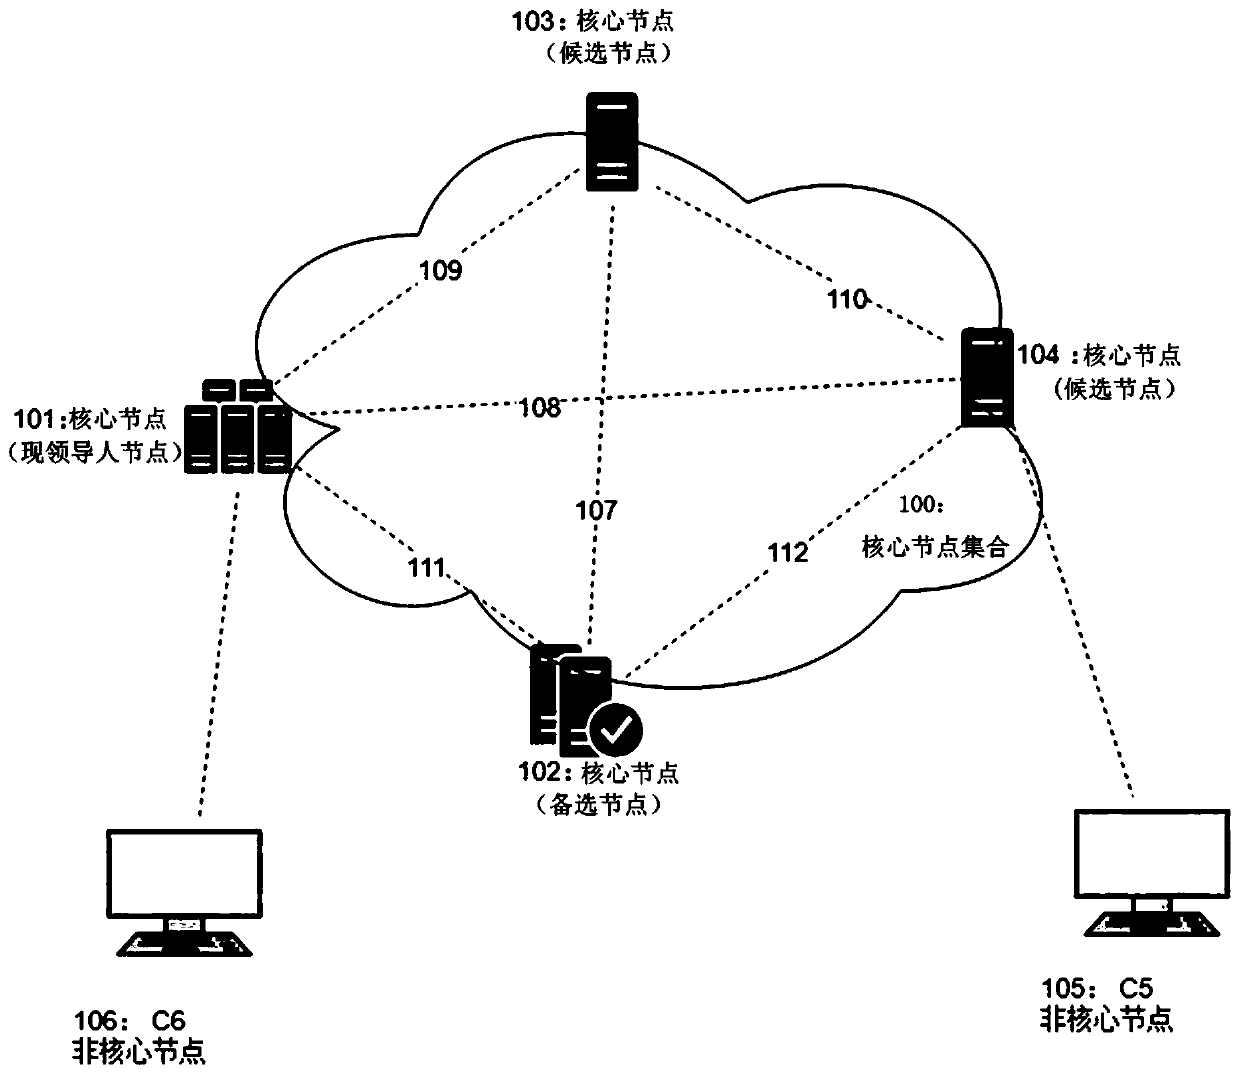 A telecom customer service method based on a block chain